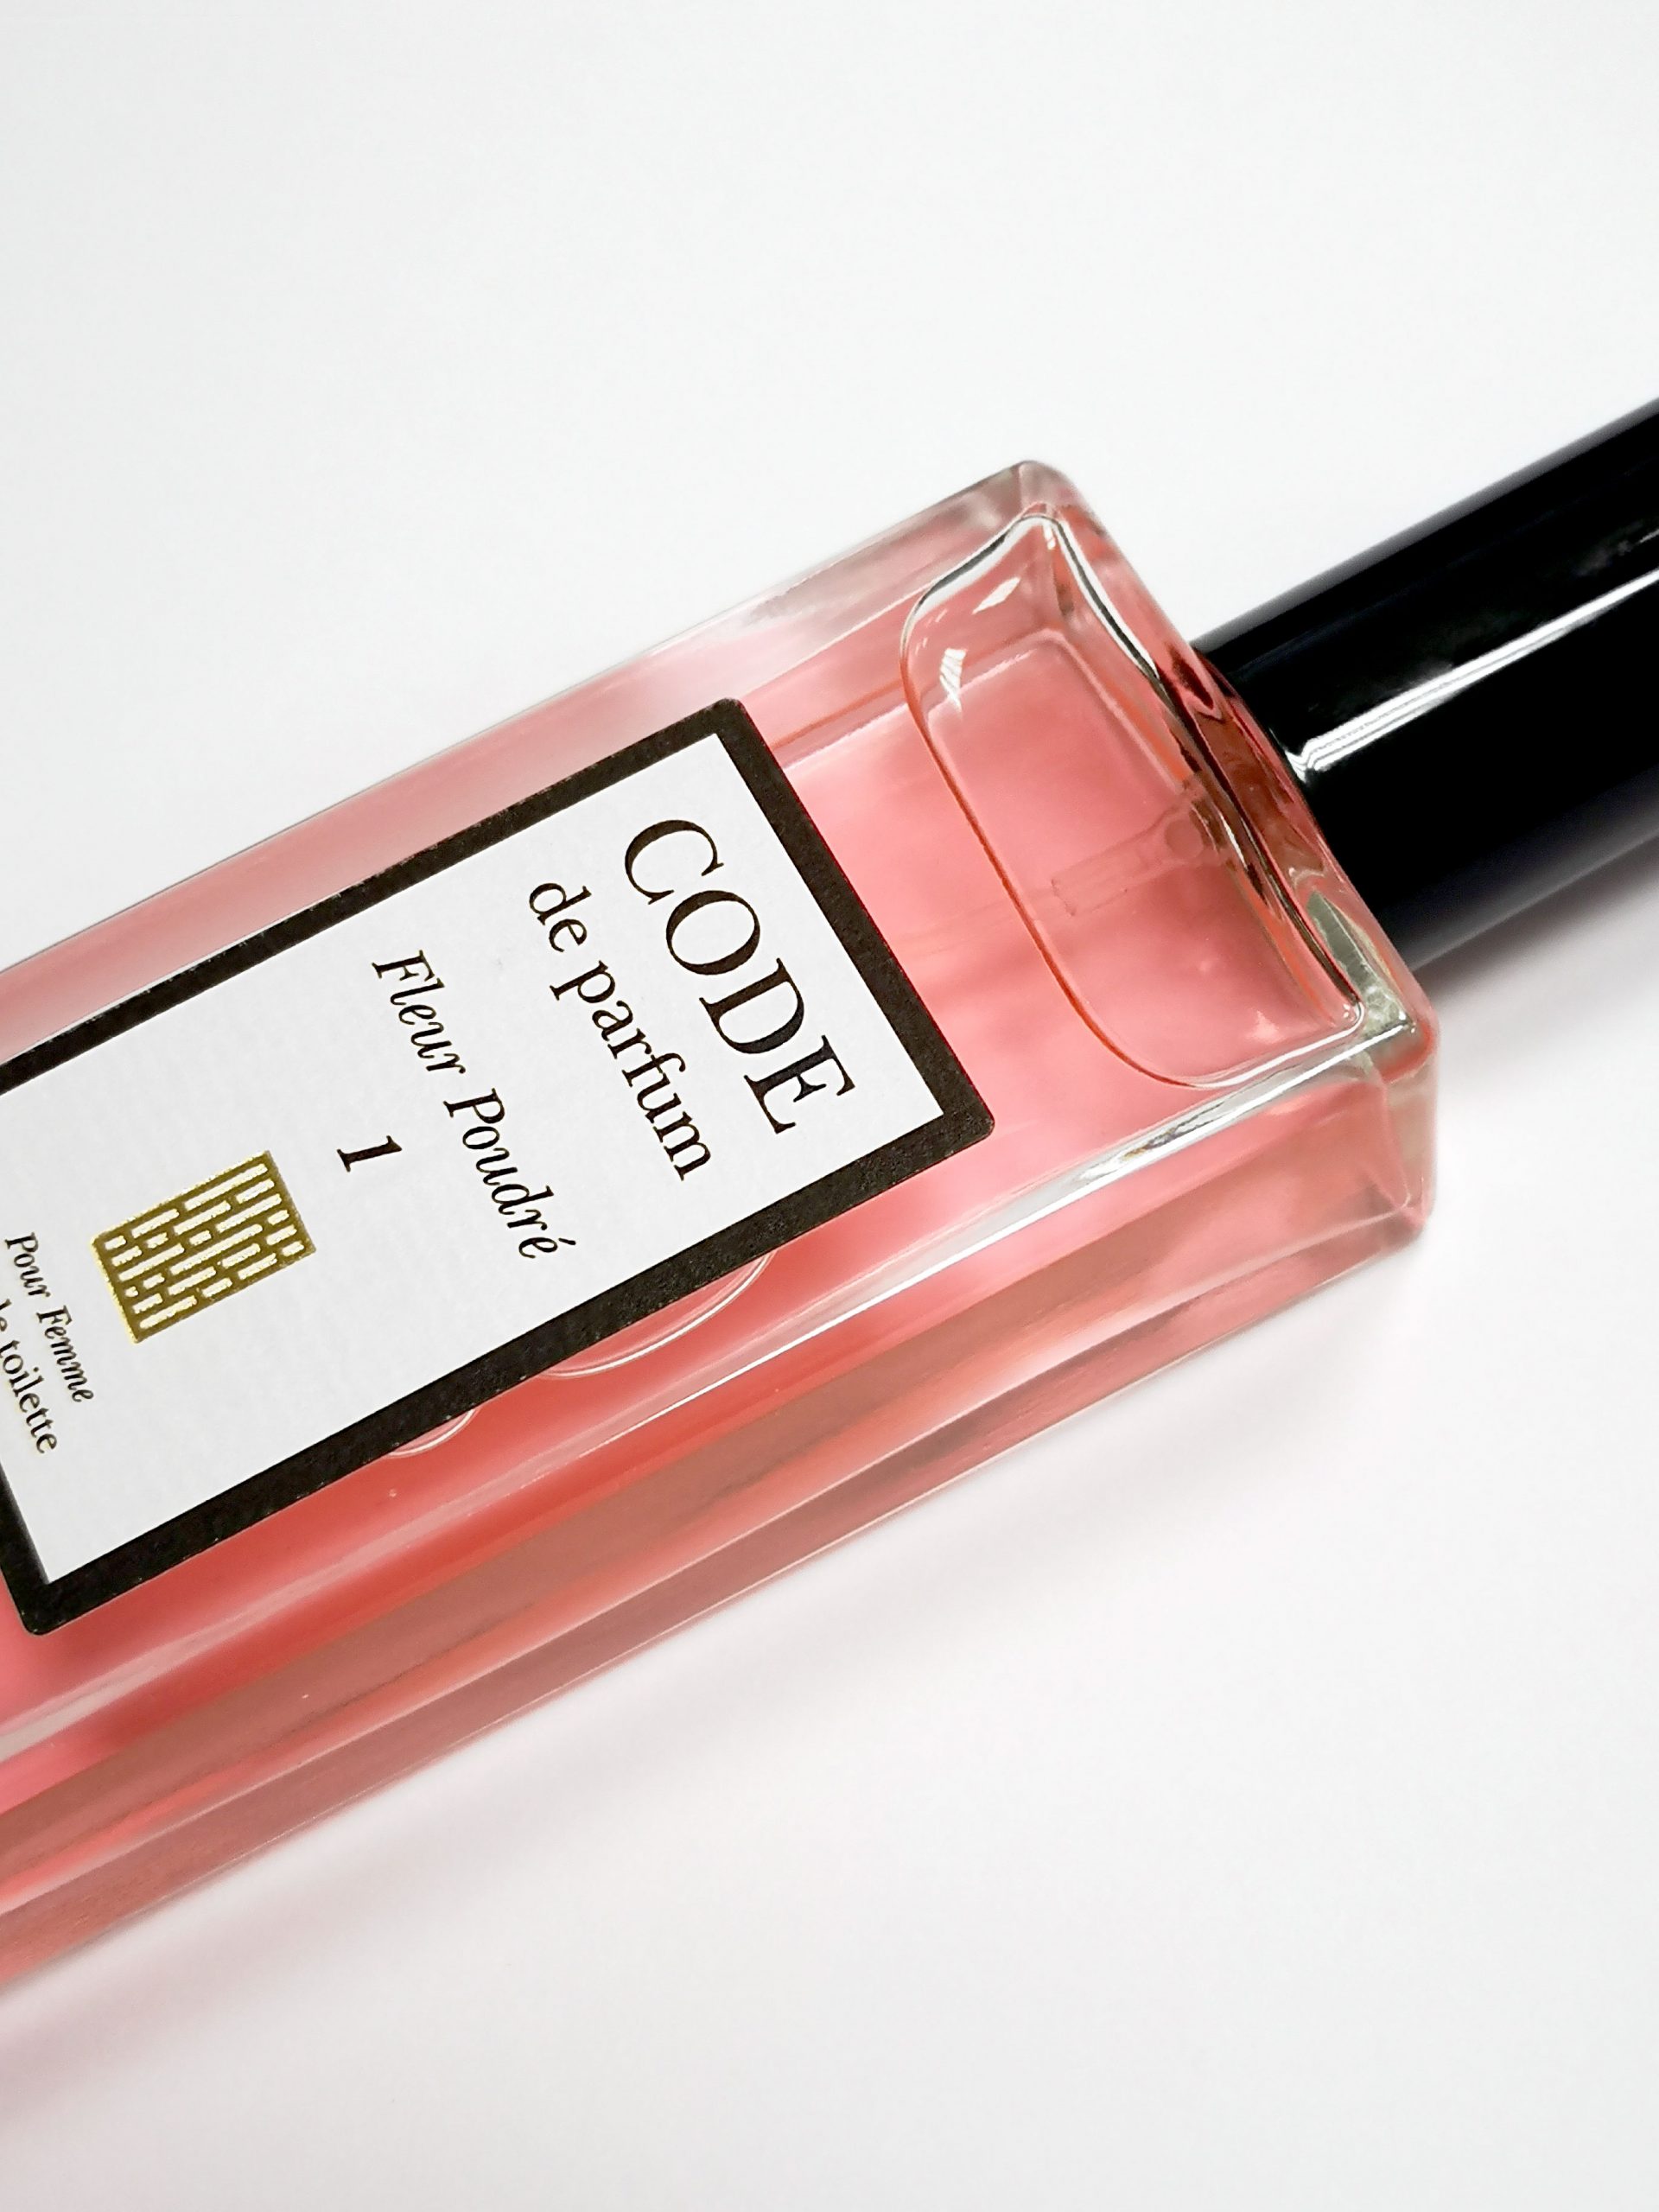 Code de parfum – fragrances series packaging design. By Color.zone creative agency.